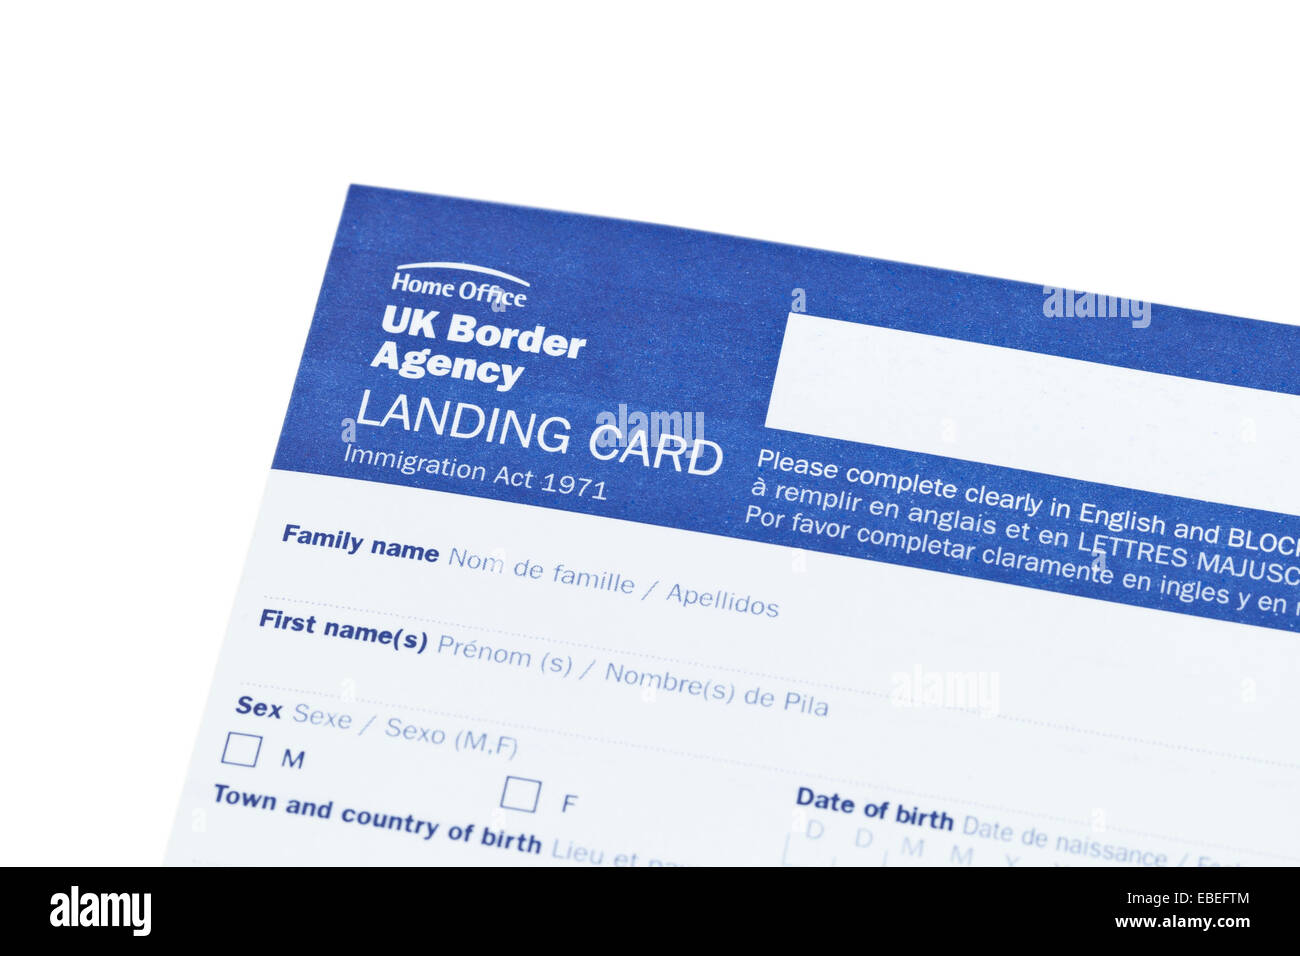 Uk border agency landing card pdf printer online